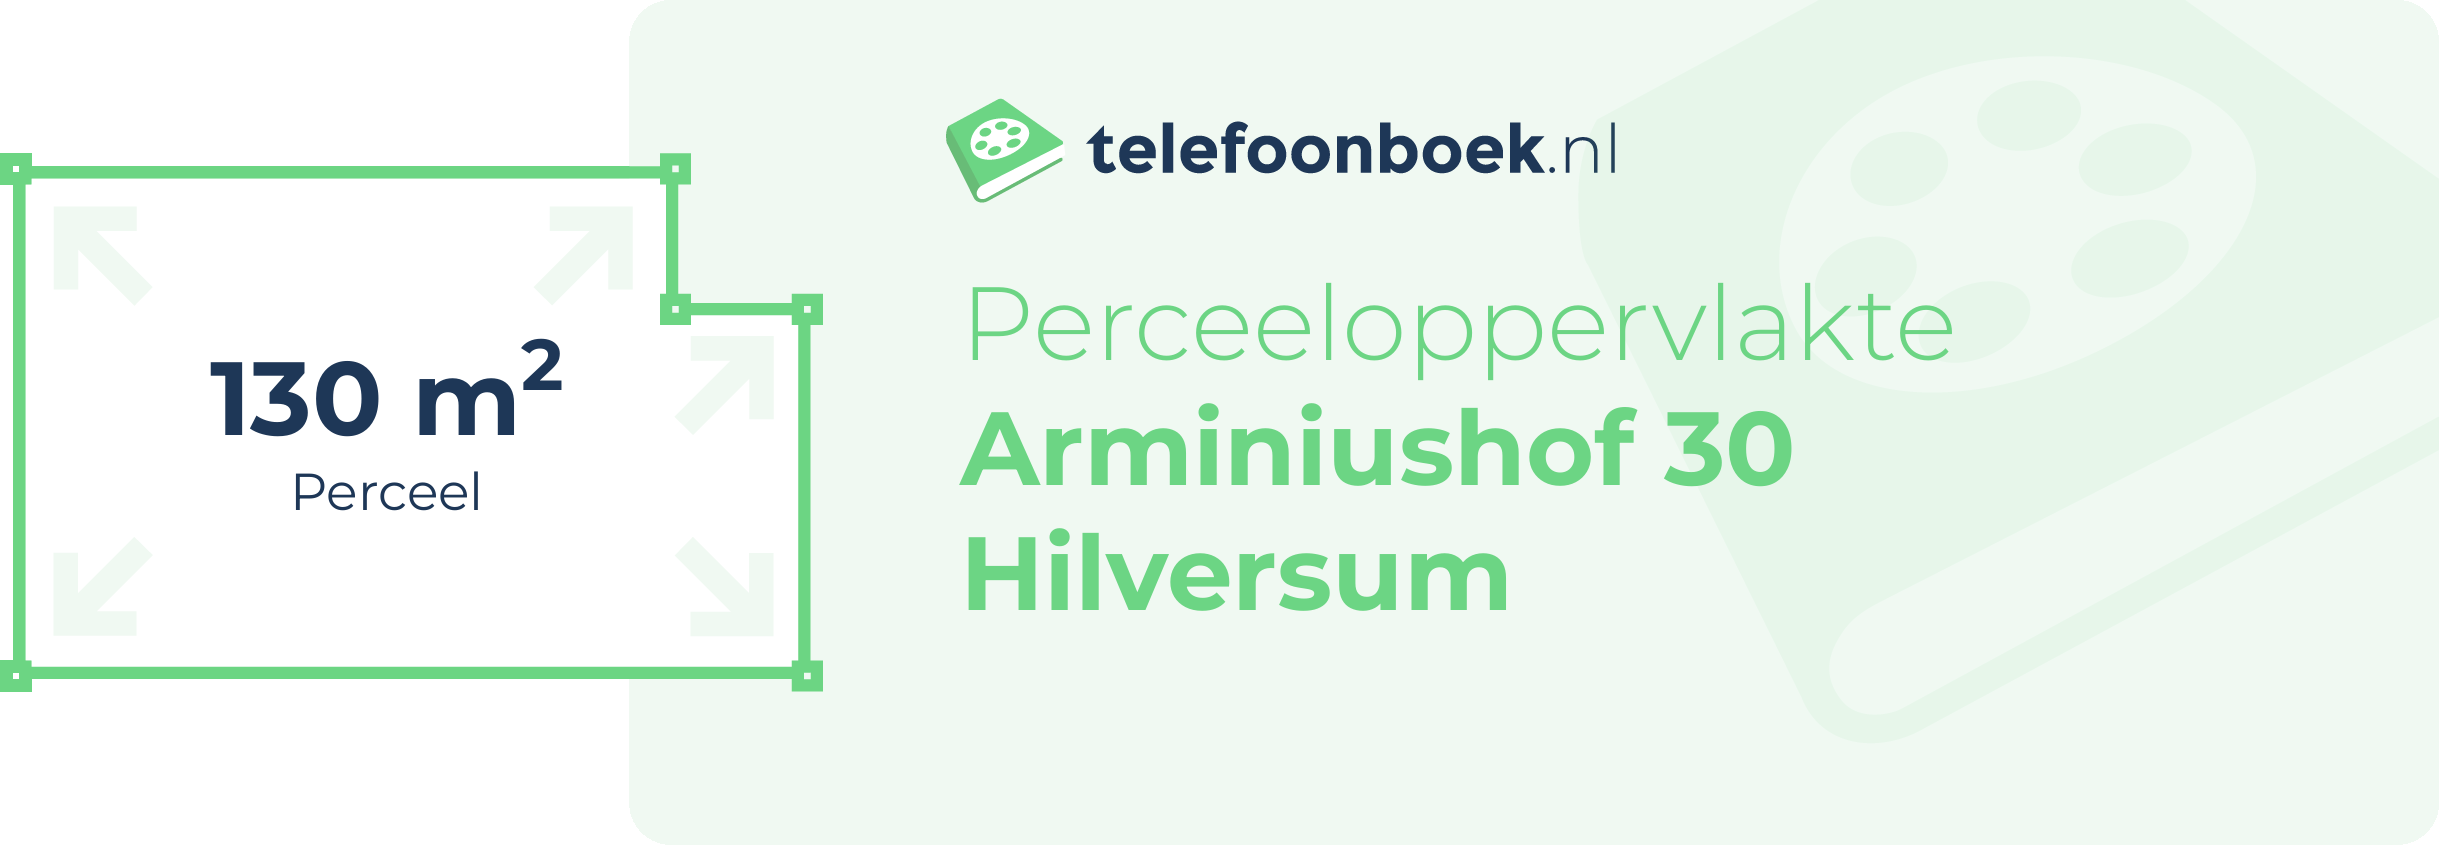 Perceeloppervlakte Arminiushof 30 Hilversum